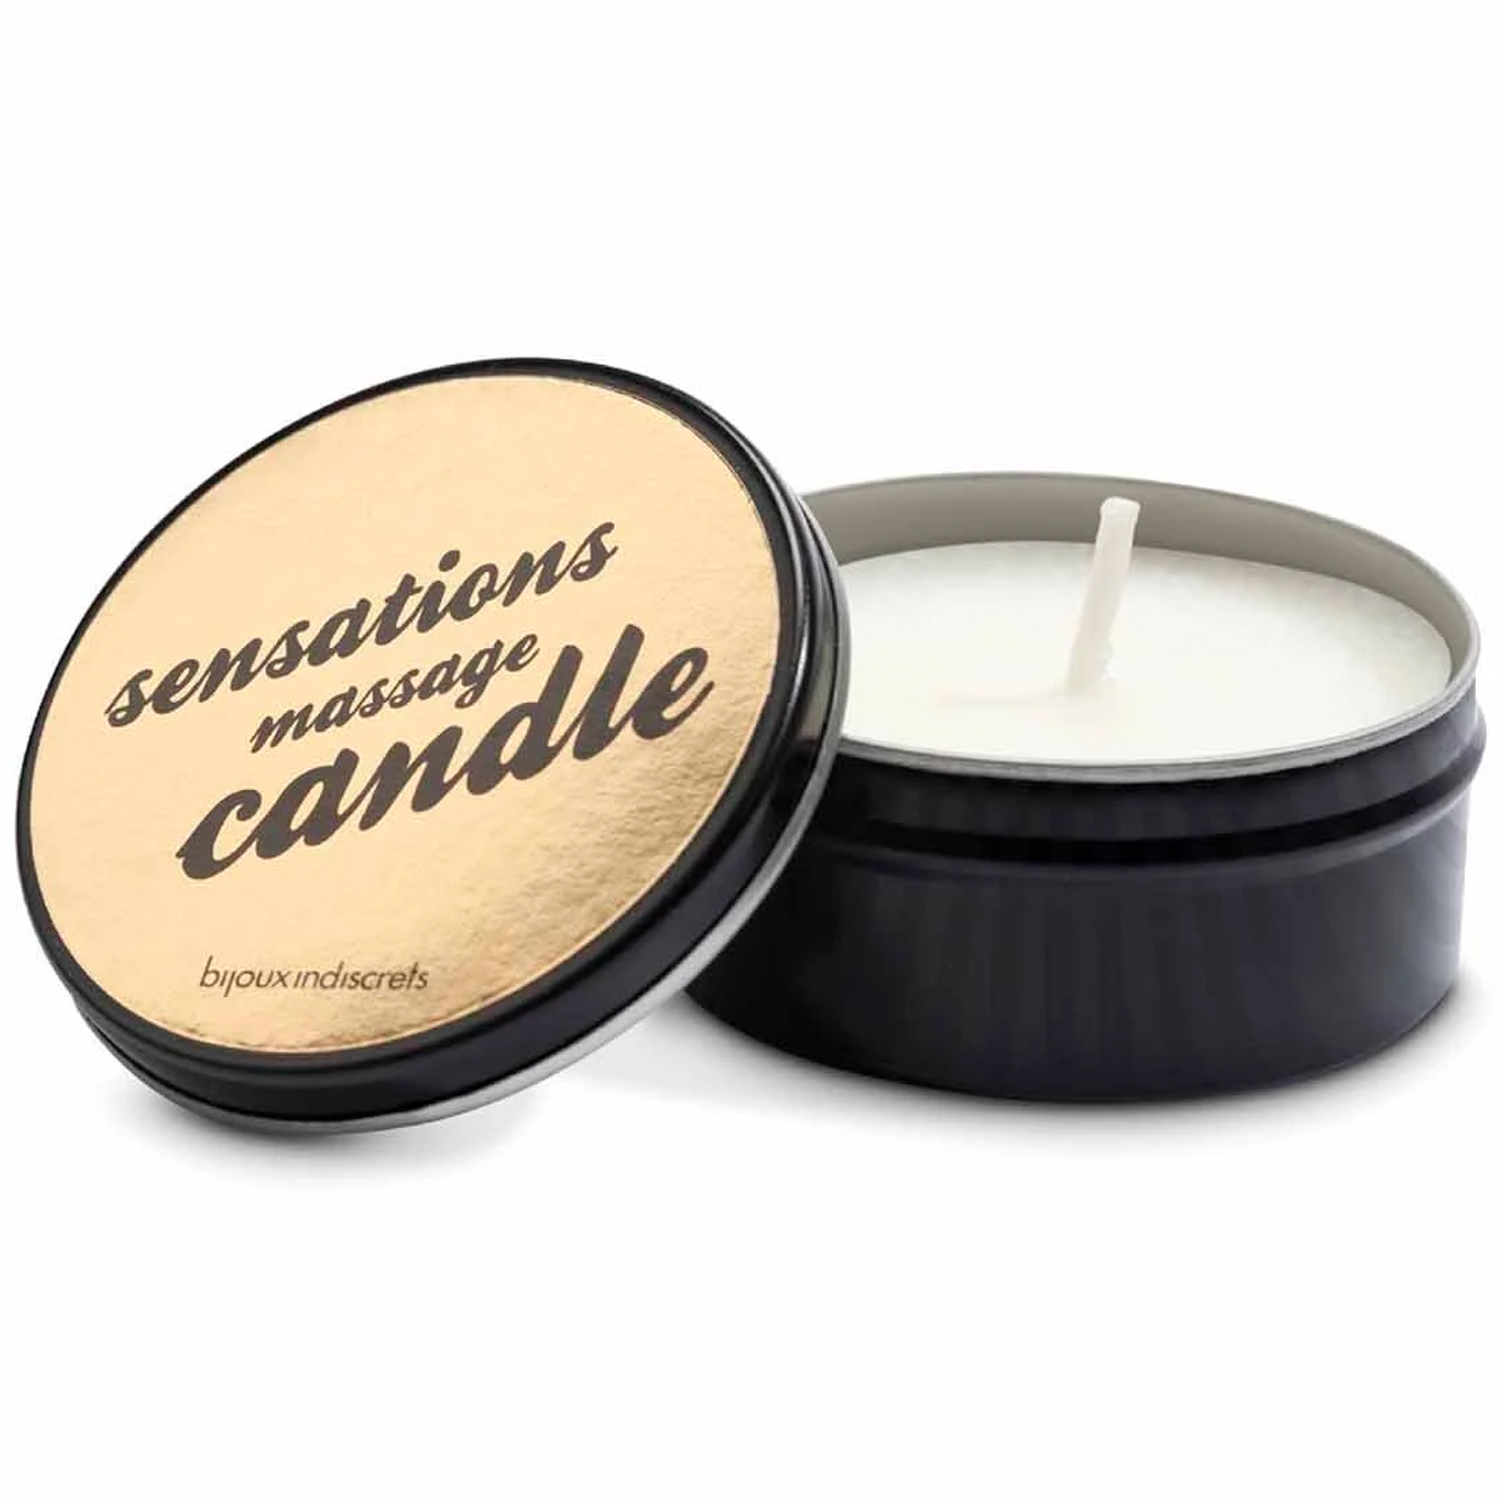 6: Bonbons Sensations Massage Candle Massagelys - Hvid